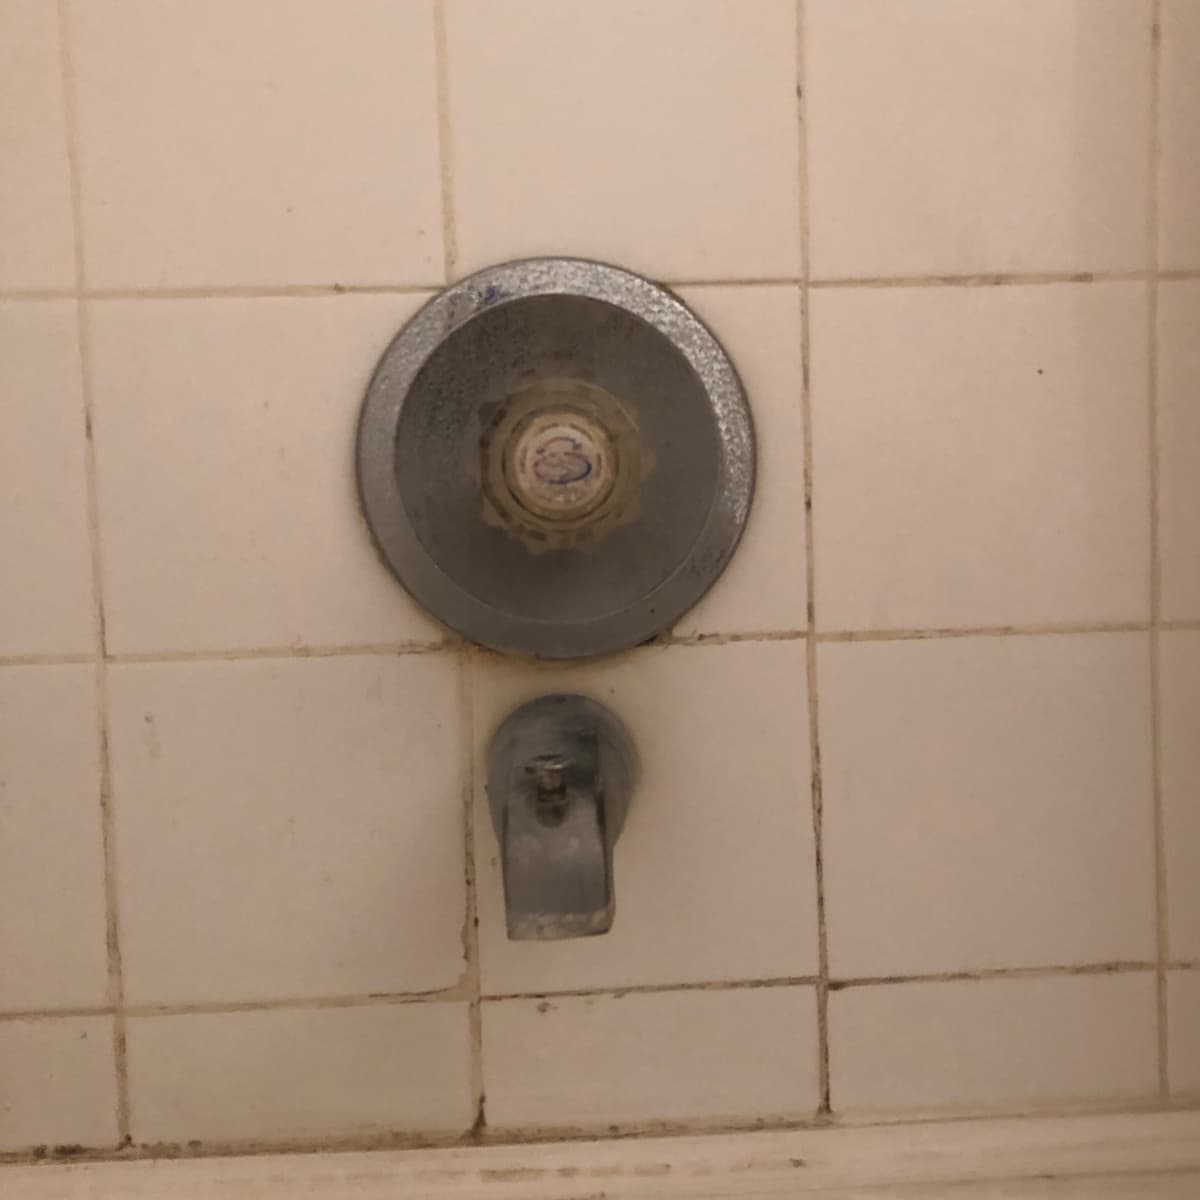 Replace A Single Handle Shower Valve, How To Fix Bathtub Shower Valve